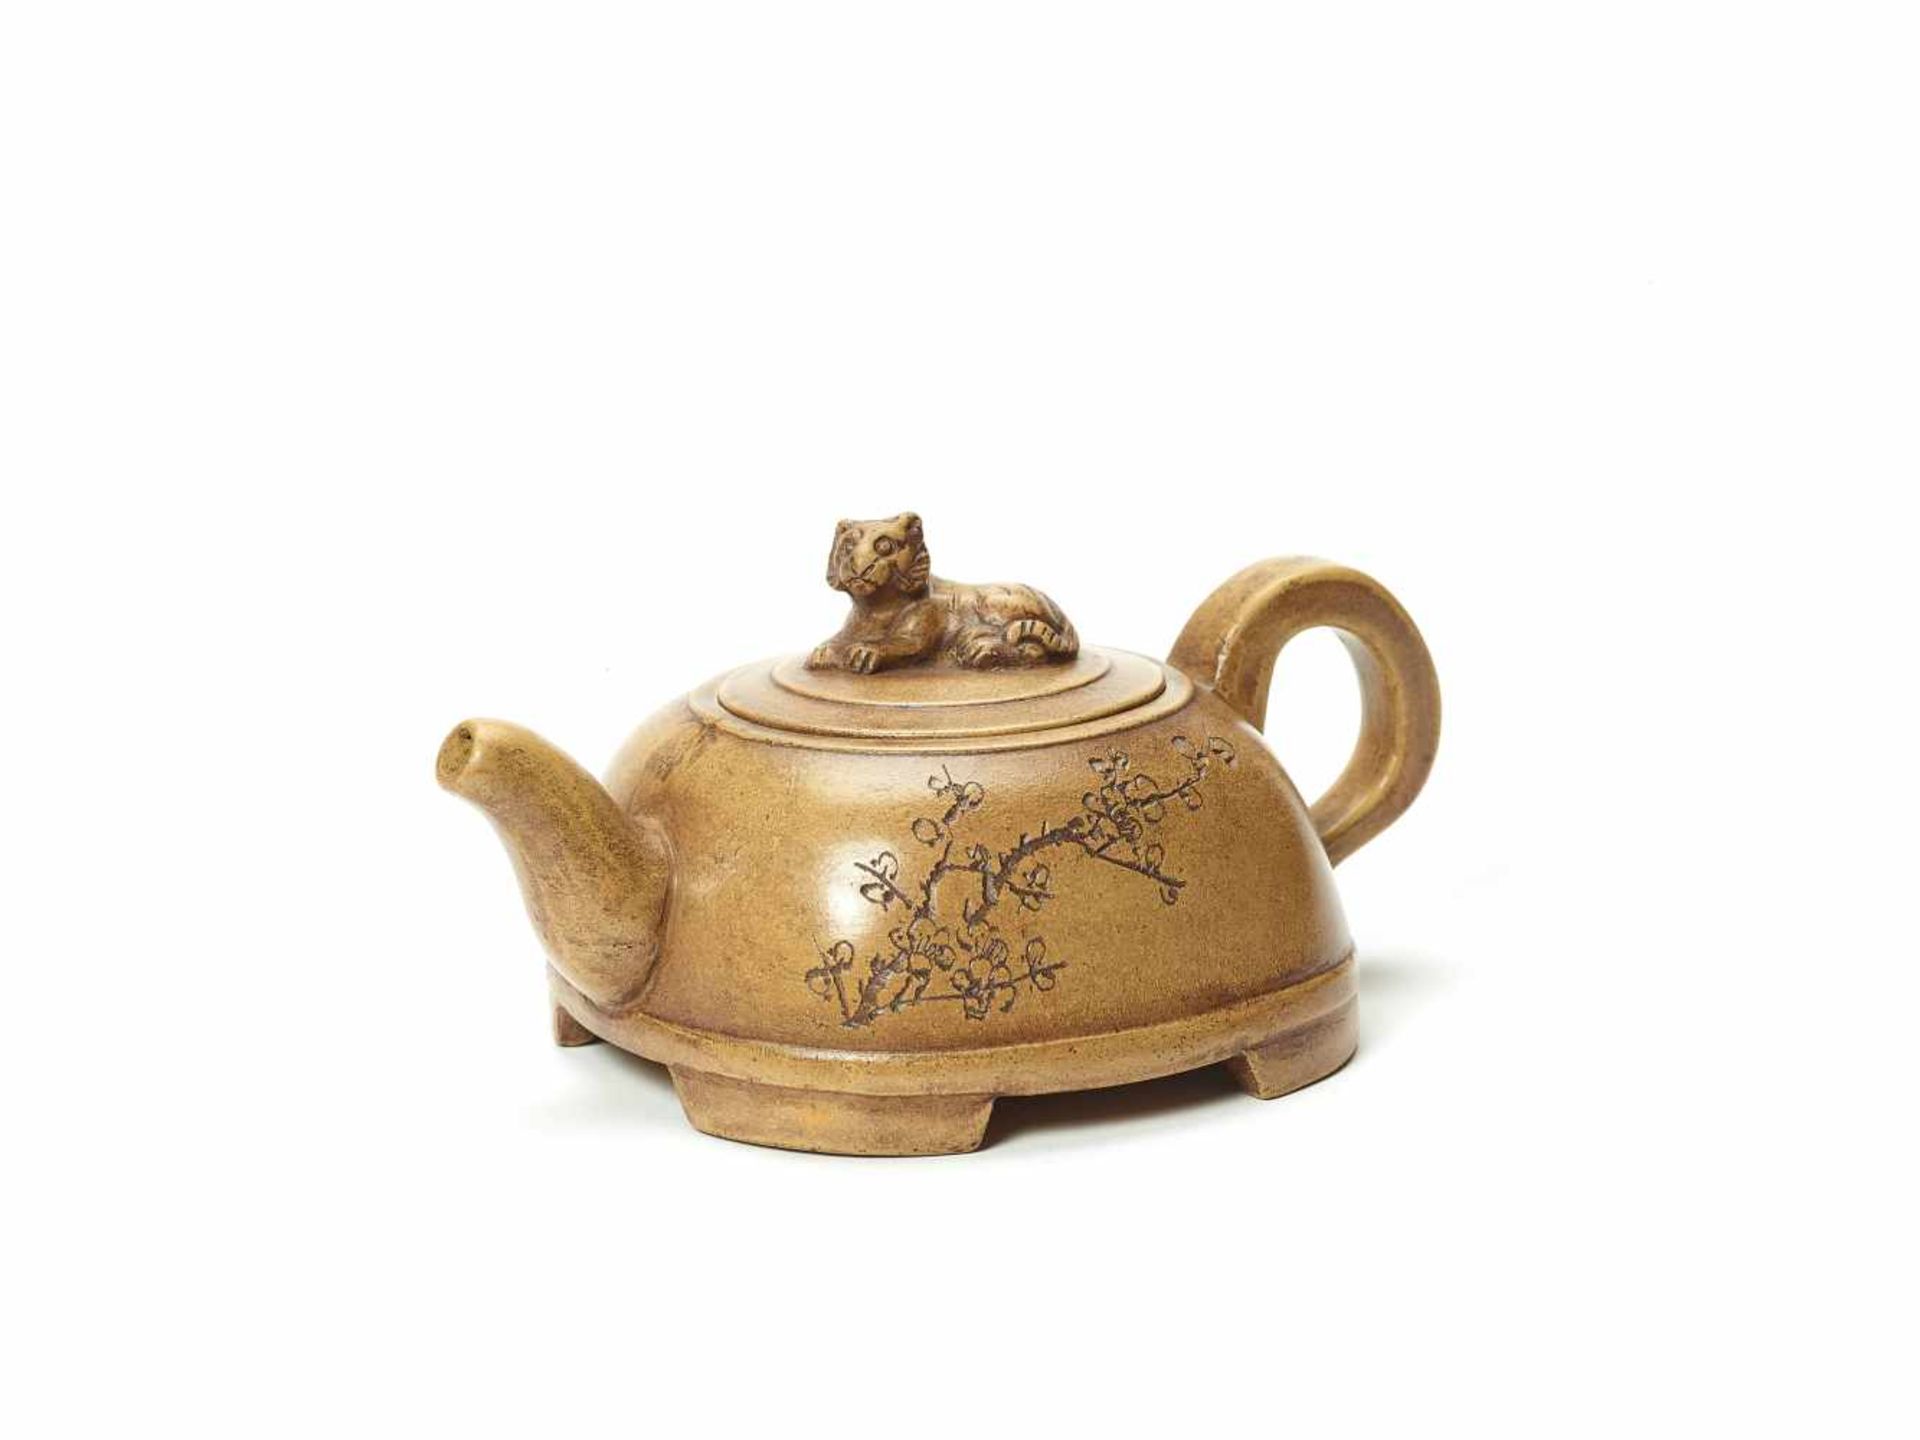 A YIXING CERAMIC ‘PRUNUS’ TEAPOT WITH TIGER FINIALYixing ceramicChina, 20th centuryThe pot with